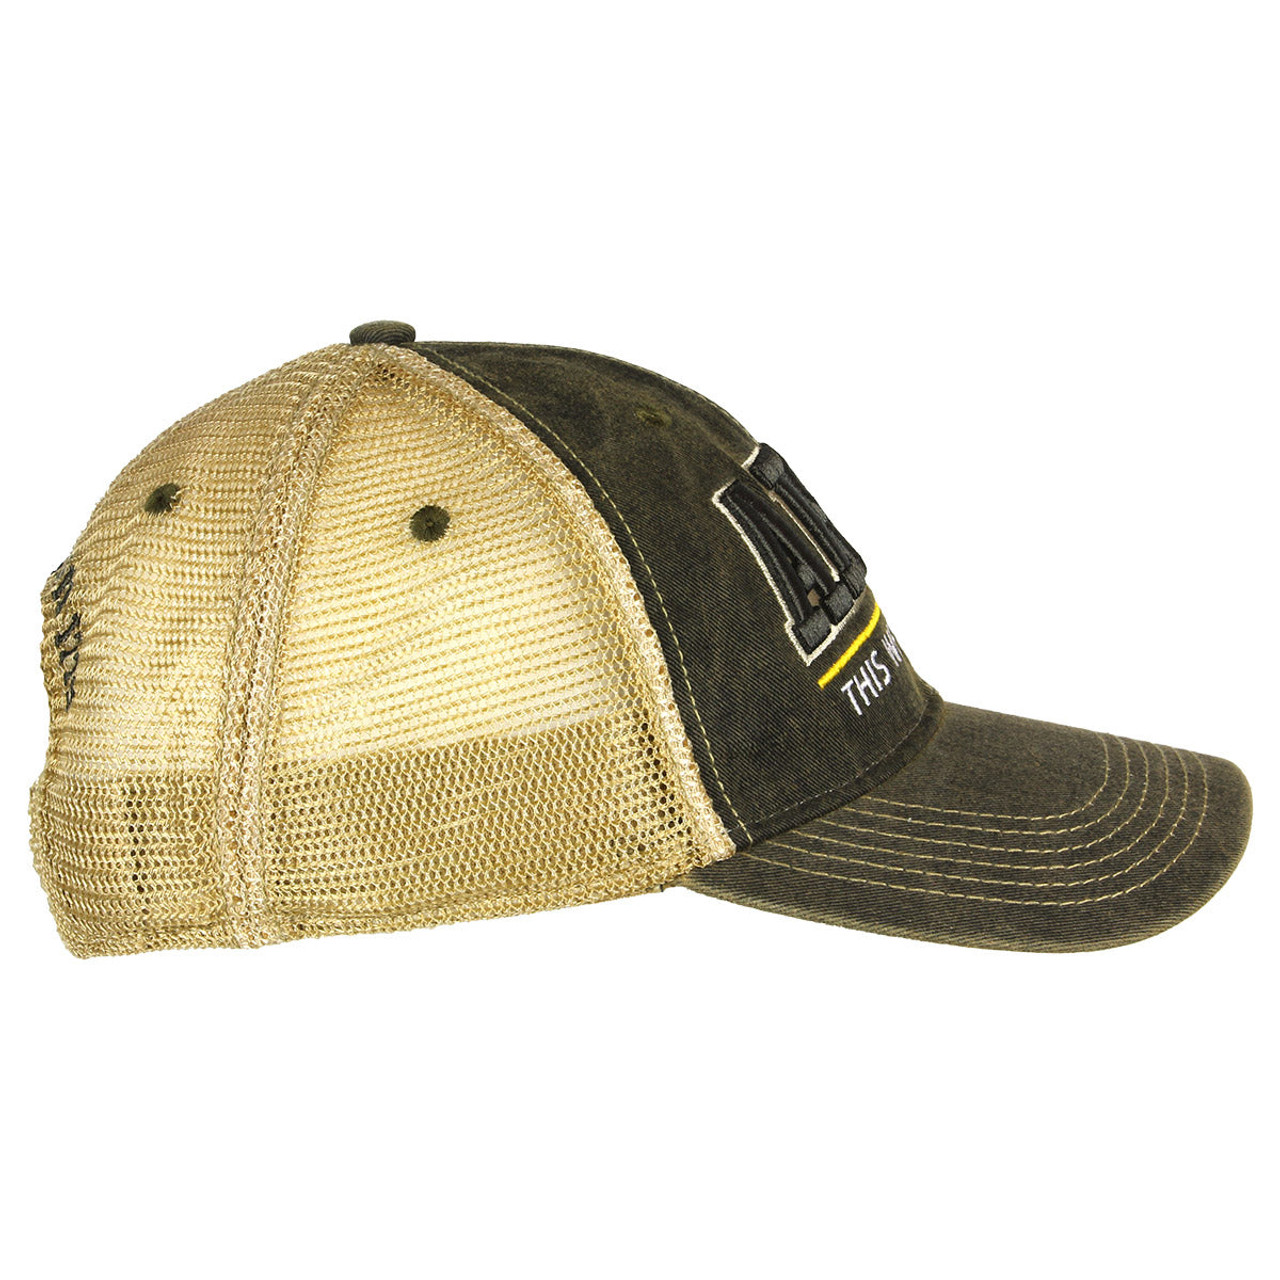 US Military Maines Hat Cap Adult Small Desert Camo Cotton Nylon Logo Mens